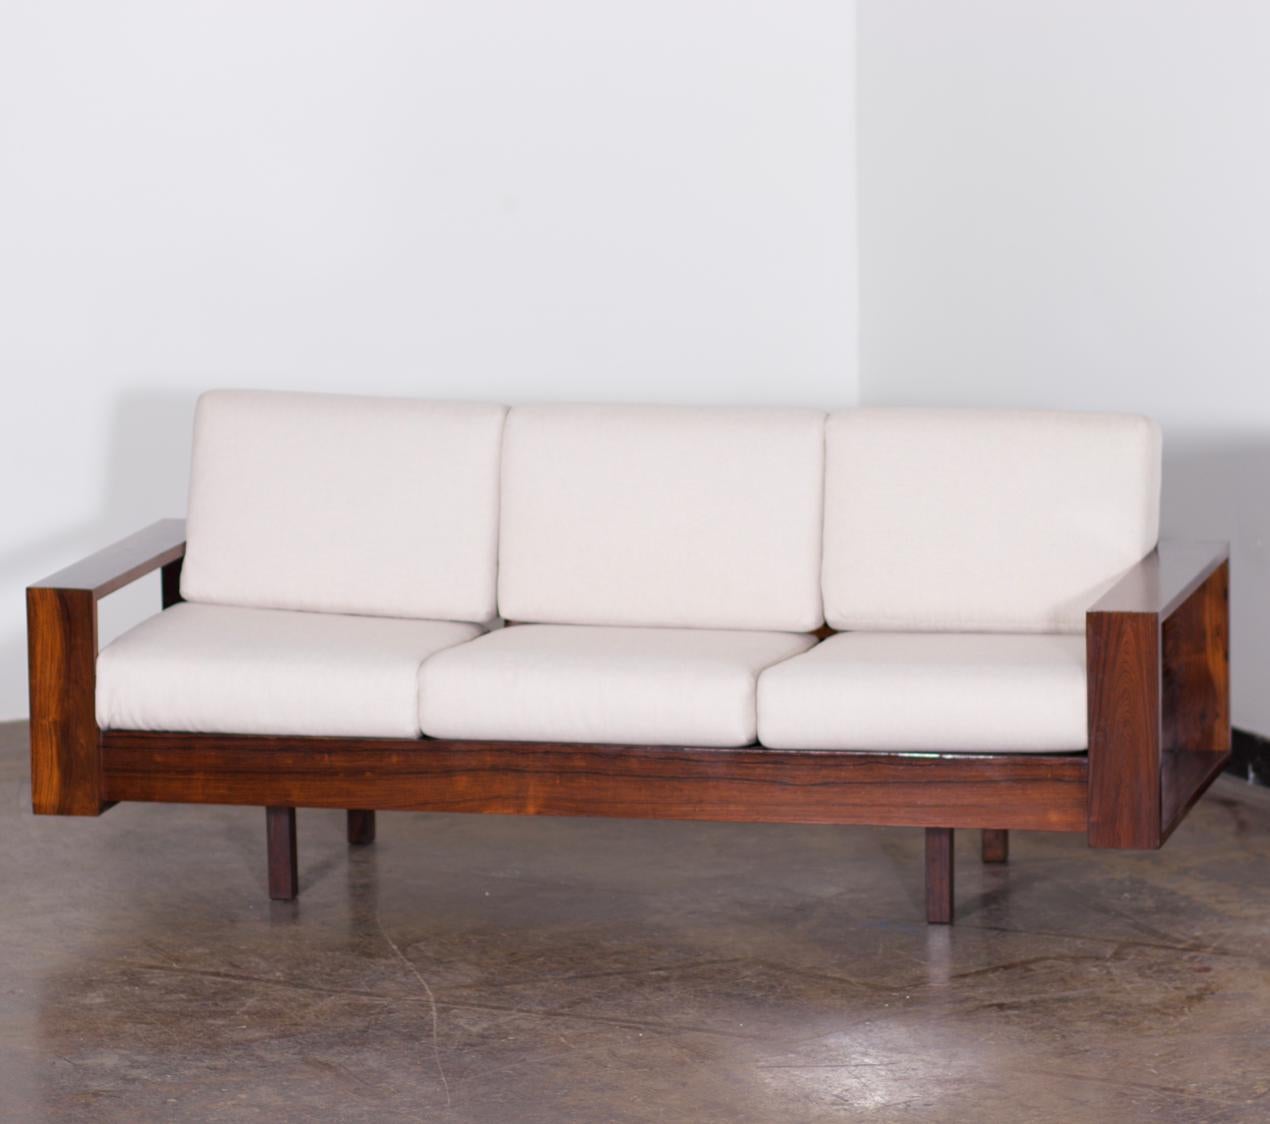 Linen Brazilian Rosewood Sofa by Celina Decorações, Midcentury Brazilian Design, 1960s